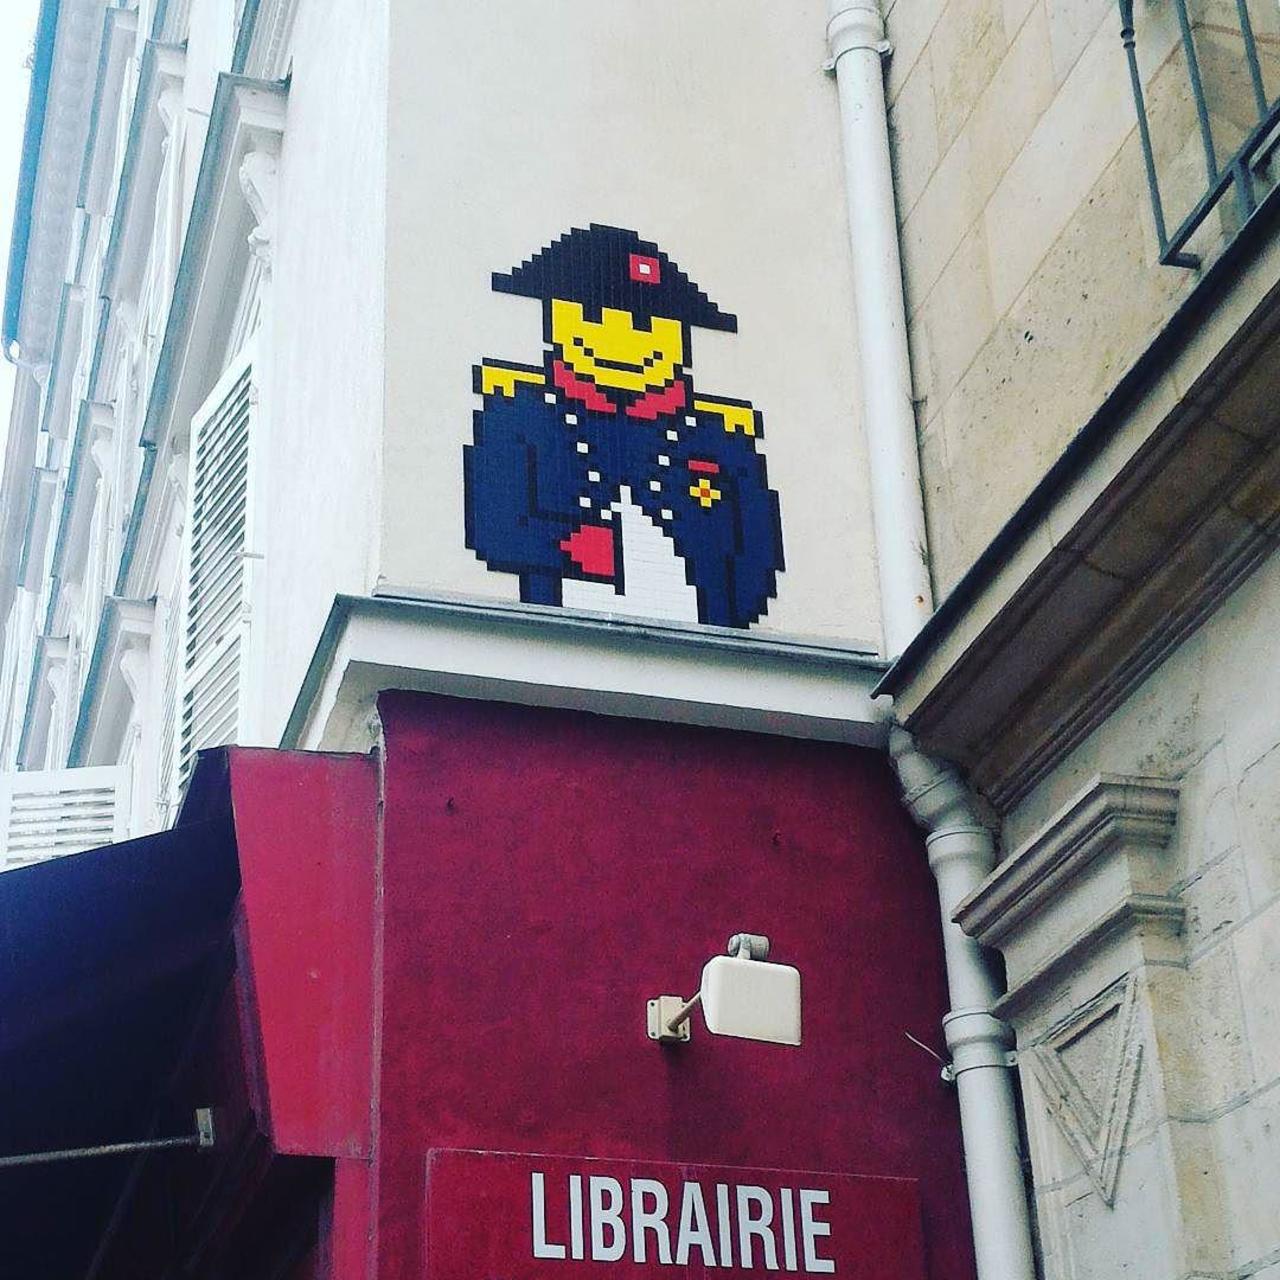 #Paris #graffiti photo by emmanuel_pujol http://ift.tt/1jKP6vY #StreetArt http://t.co/ktmwBgwSfx https://goo.gl/t4fpx2